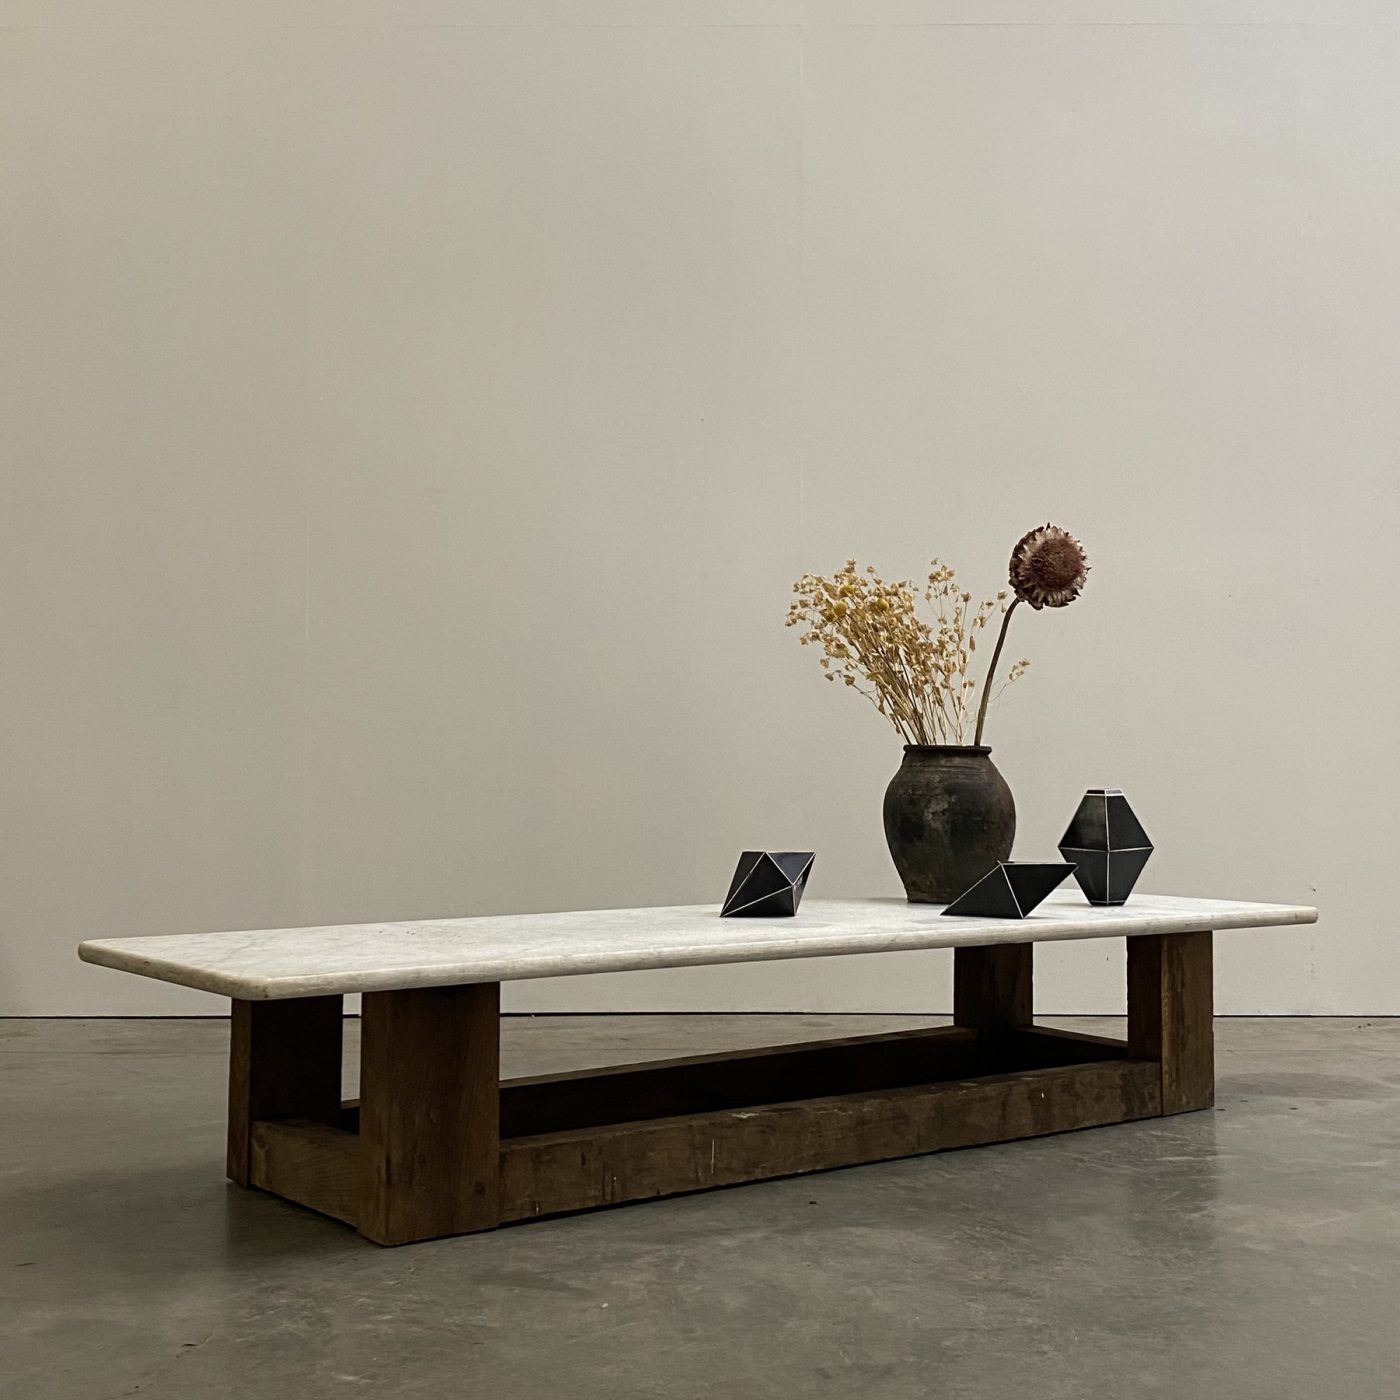 objet-vagabond-marble-table0006